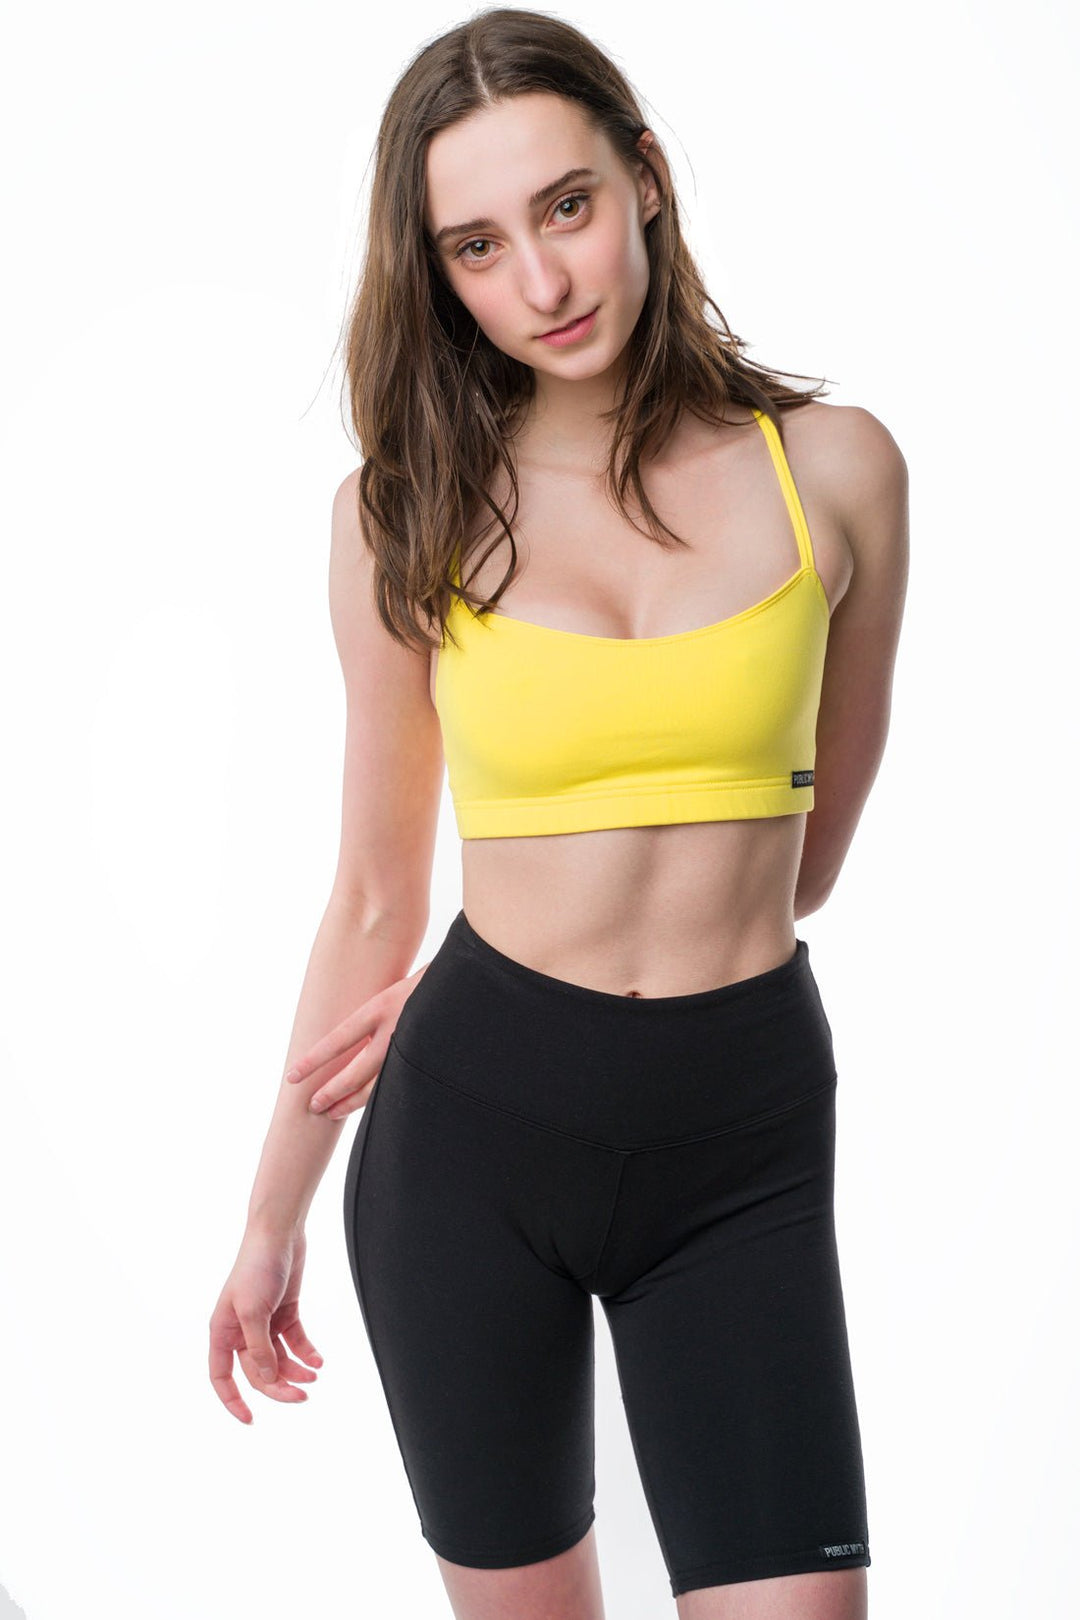 Strappy sport bra in yellow